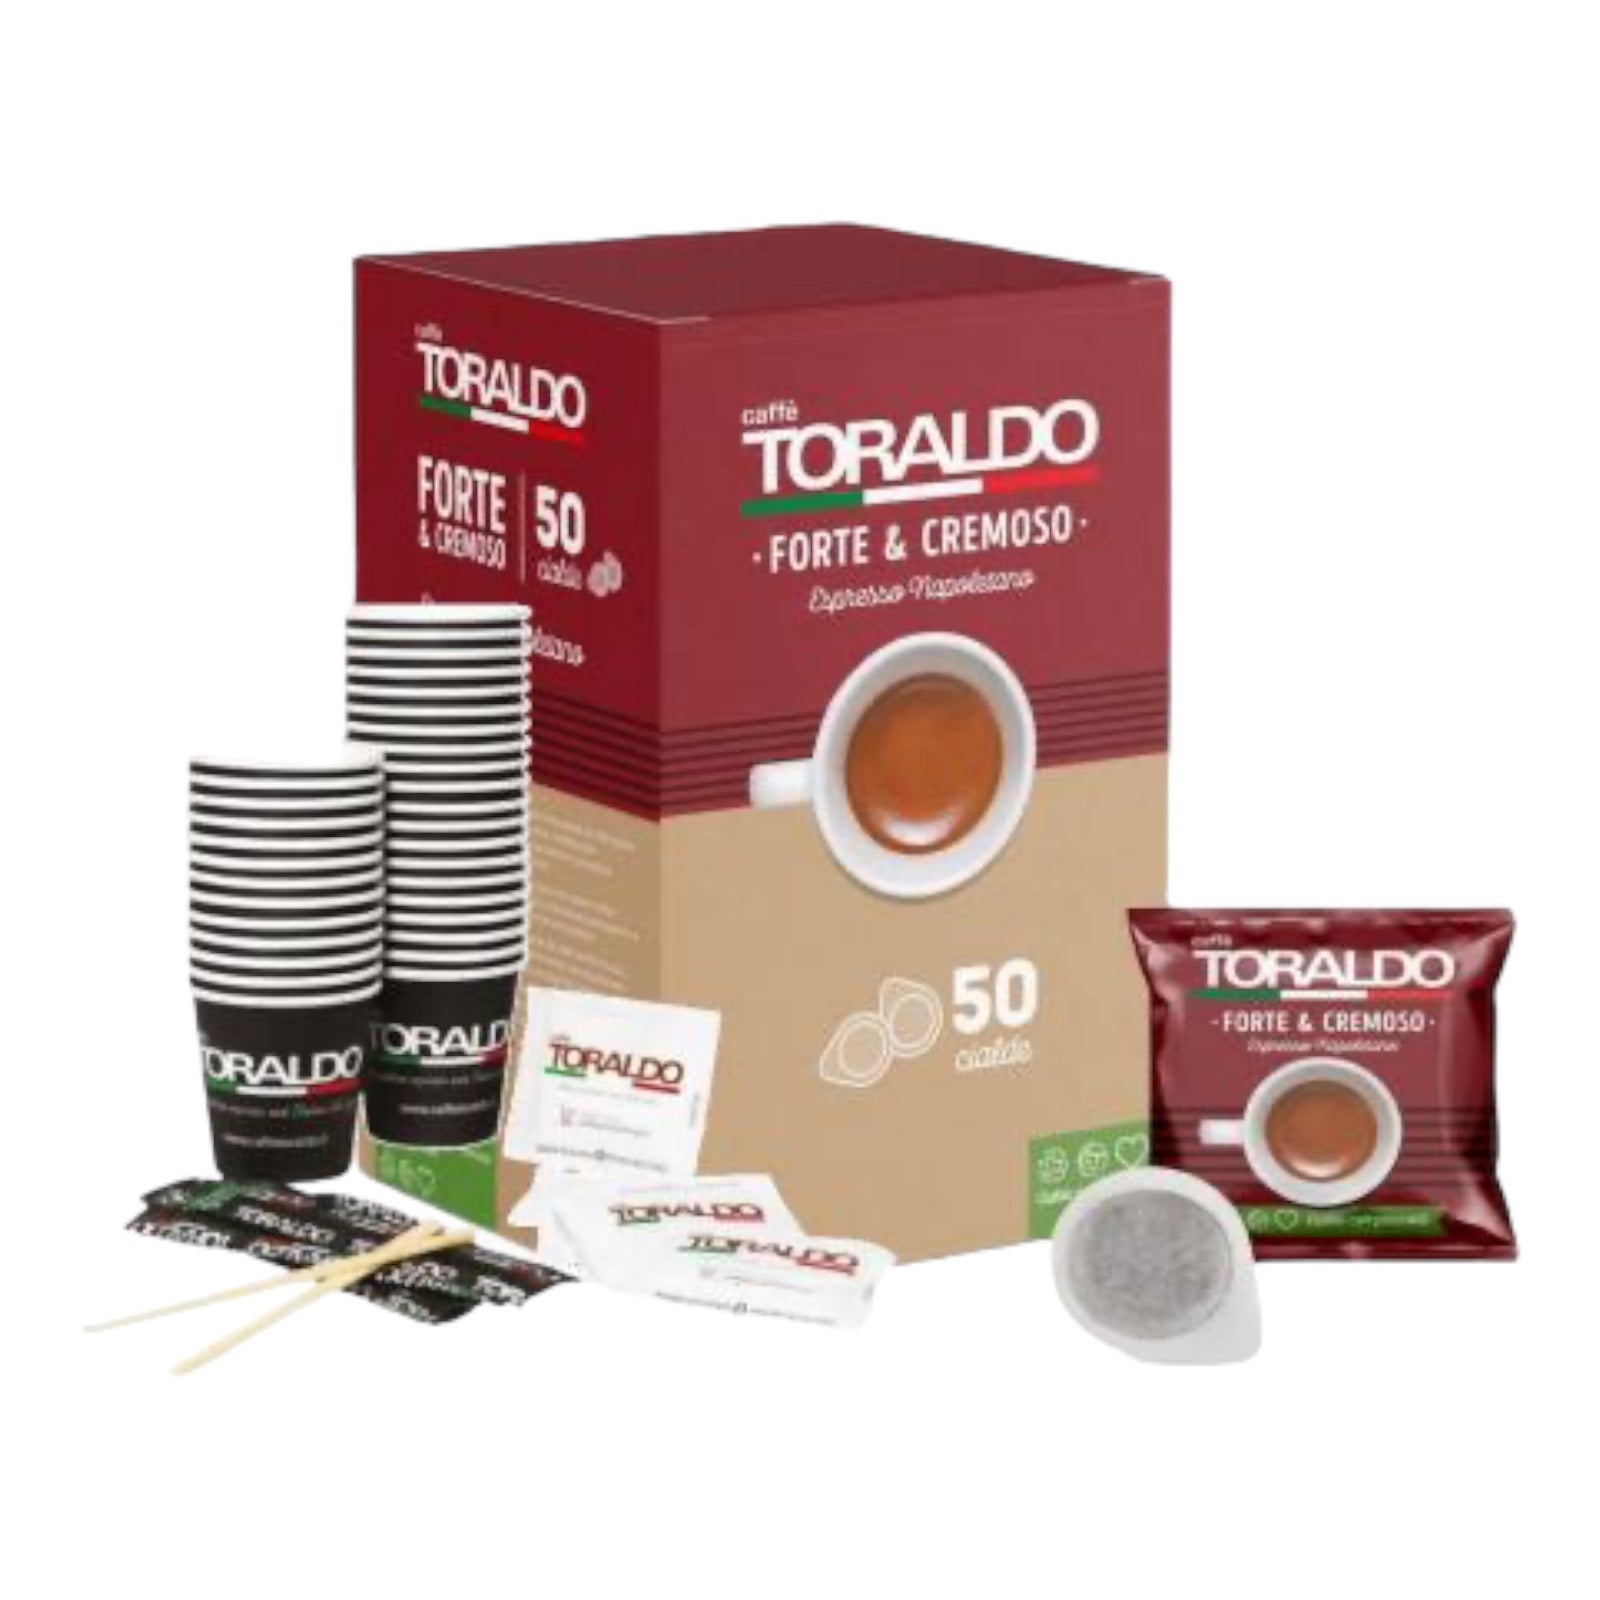 Caffe Toraldo Forte & Cremoso 50 Pods With Kit